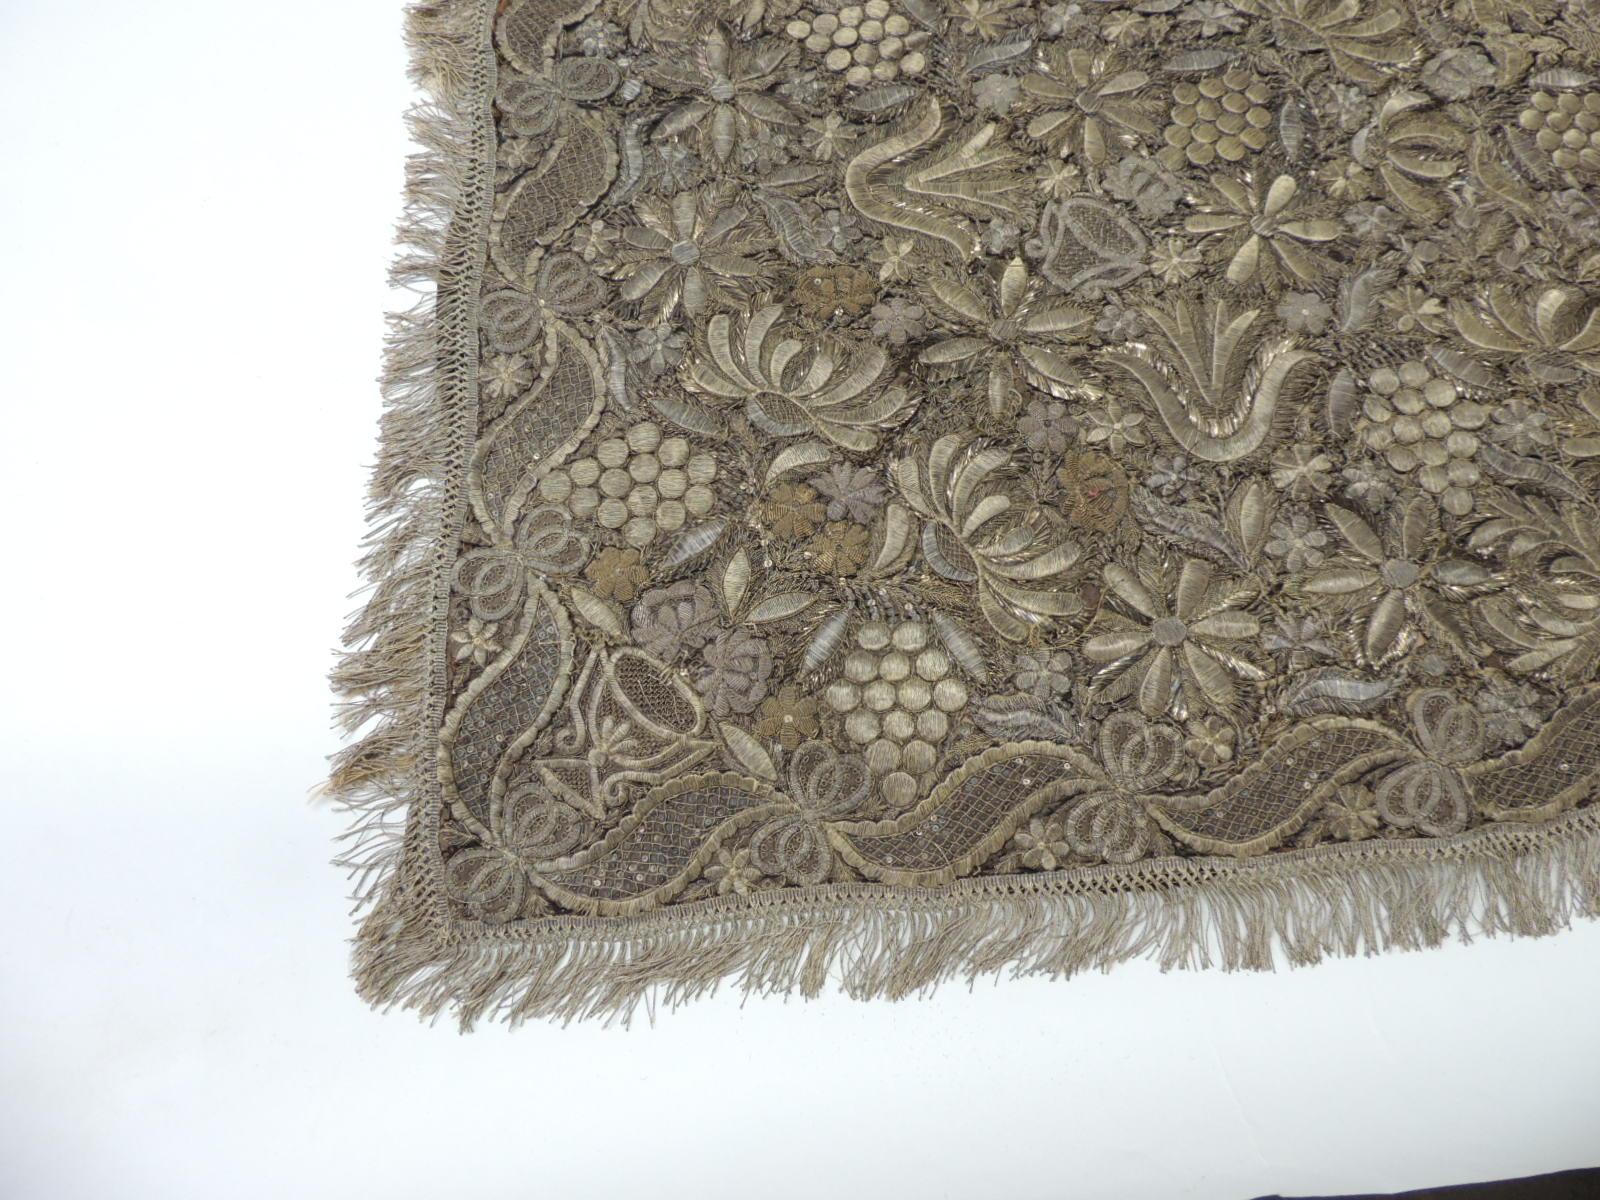 18th Century Persian Ottoman Empire Heavy Gold Metallic Threads Textile 1